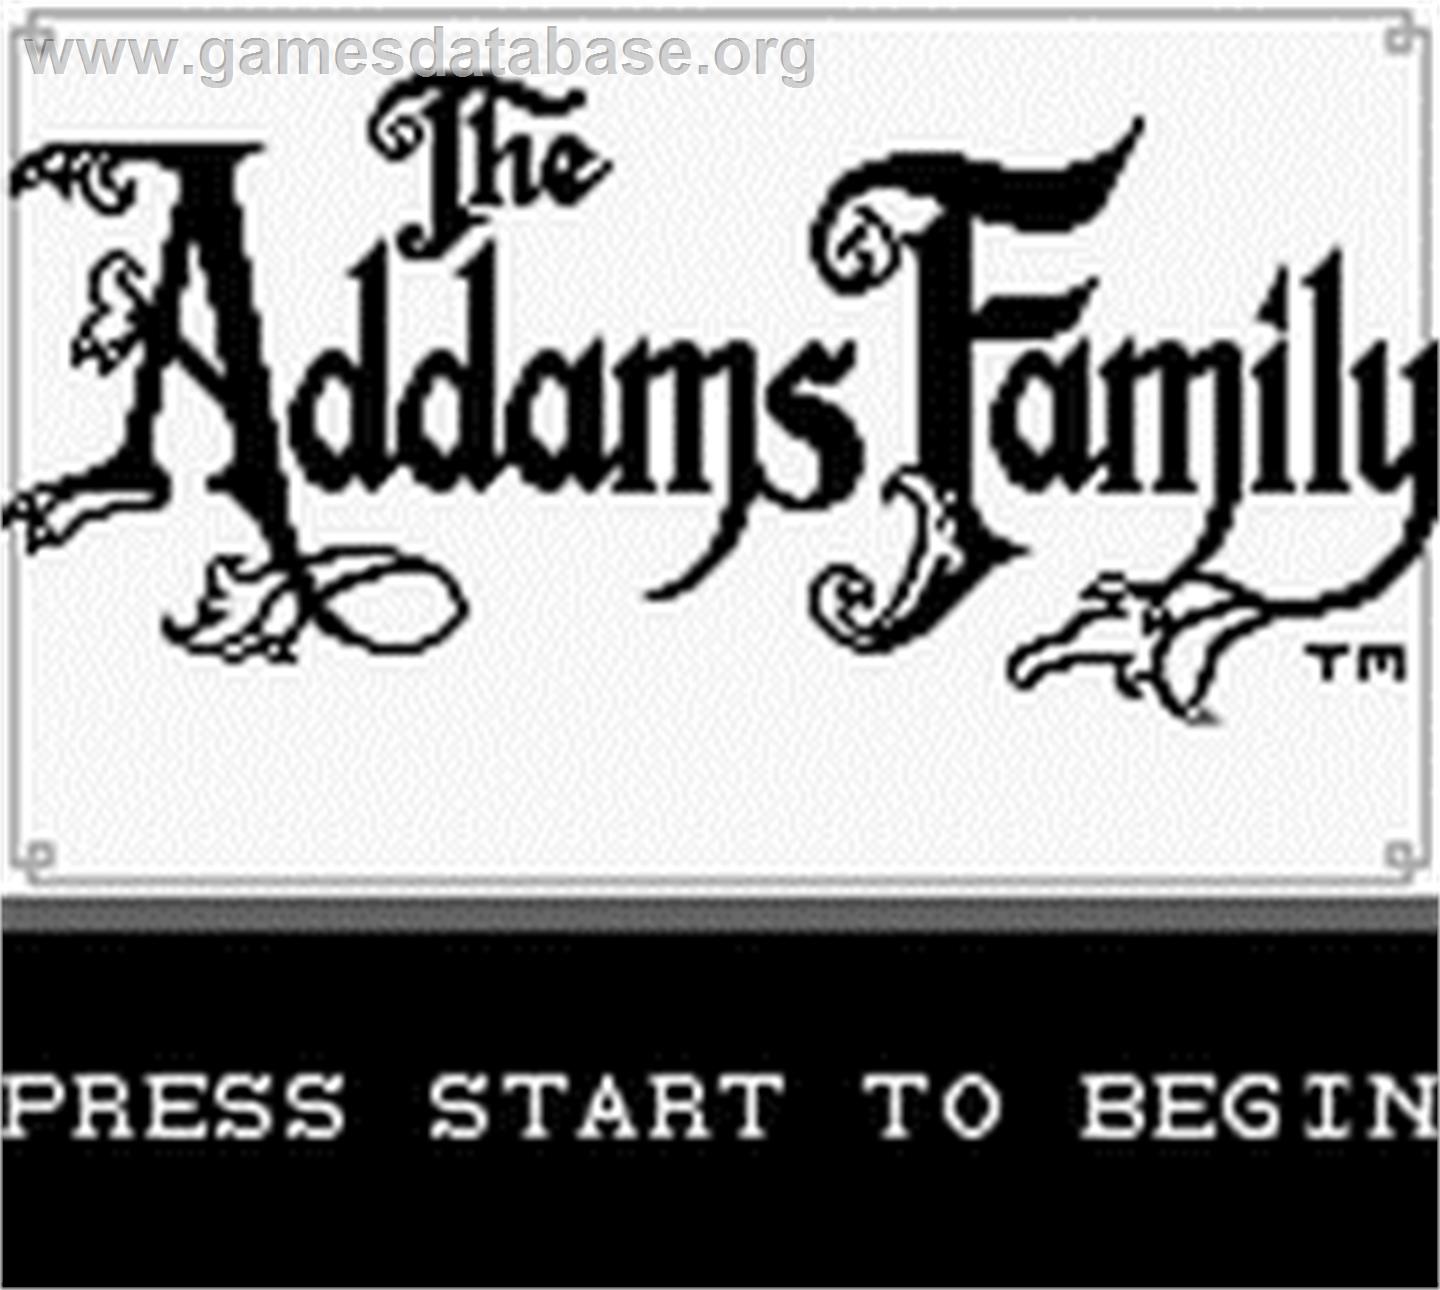 Addams Family, The - Nintendo Game Boy - Artwork - Title Screen